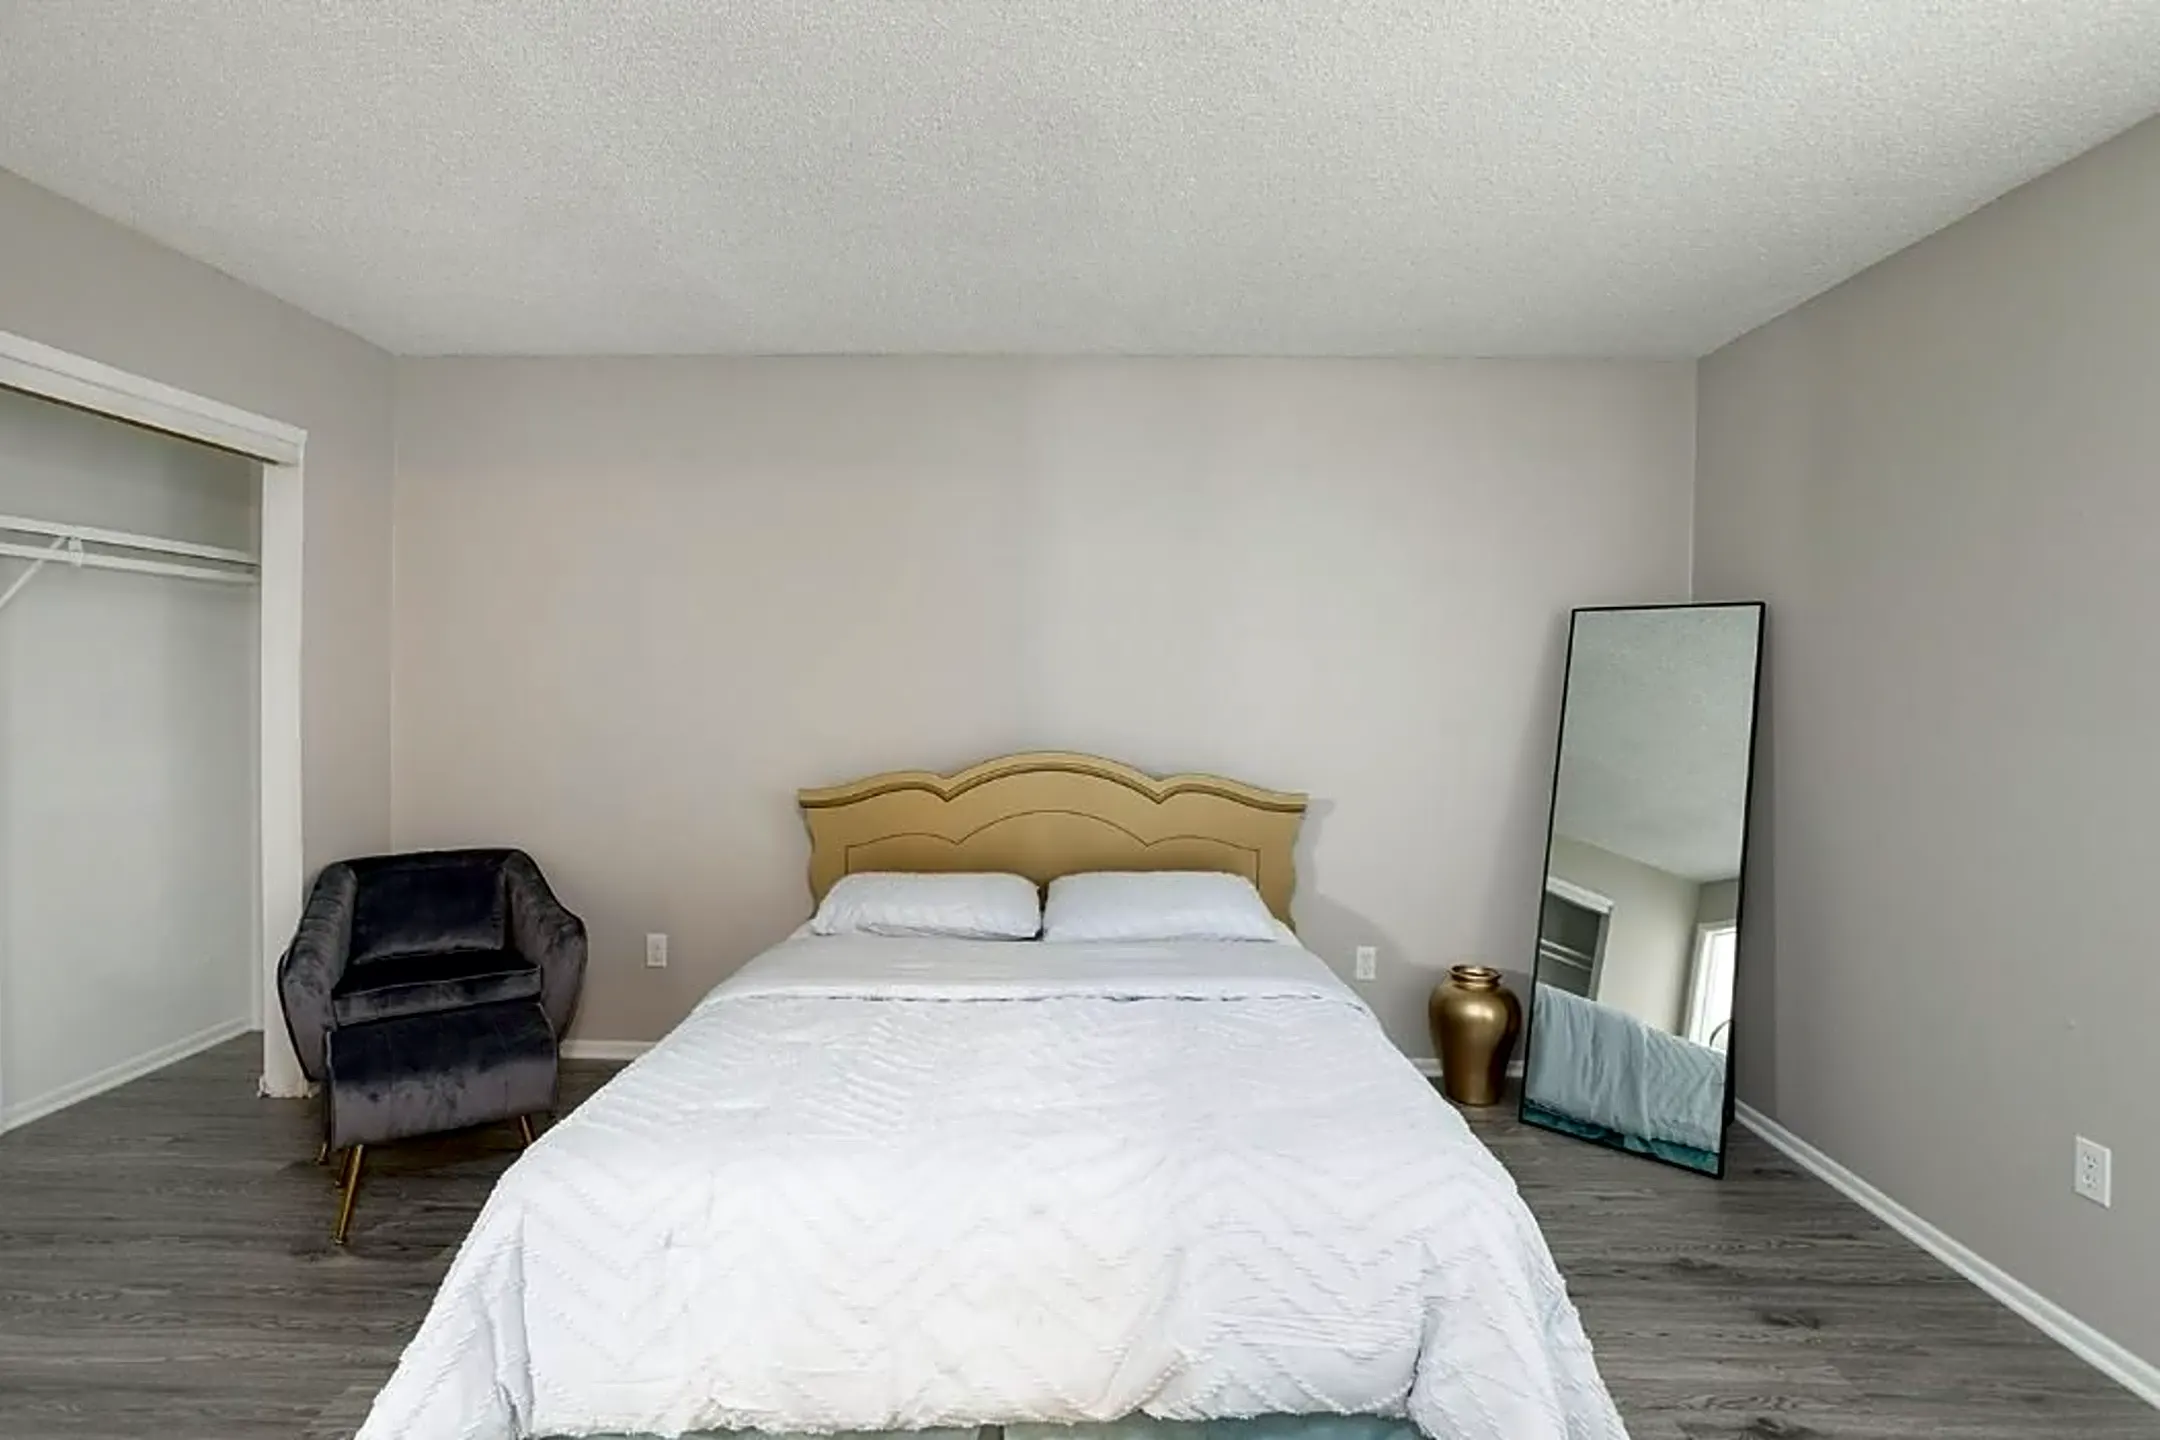 Bedroom - Horizons East - Wichita, KS